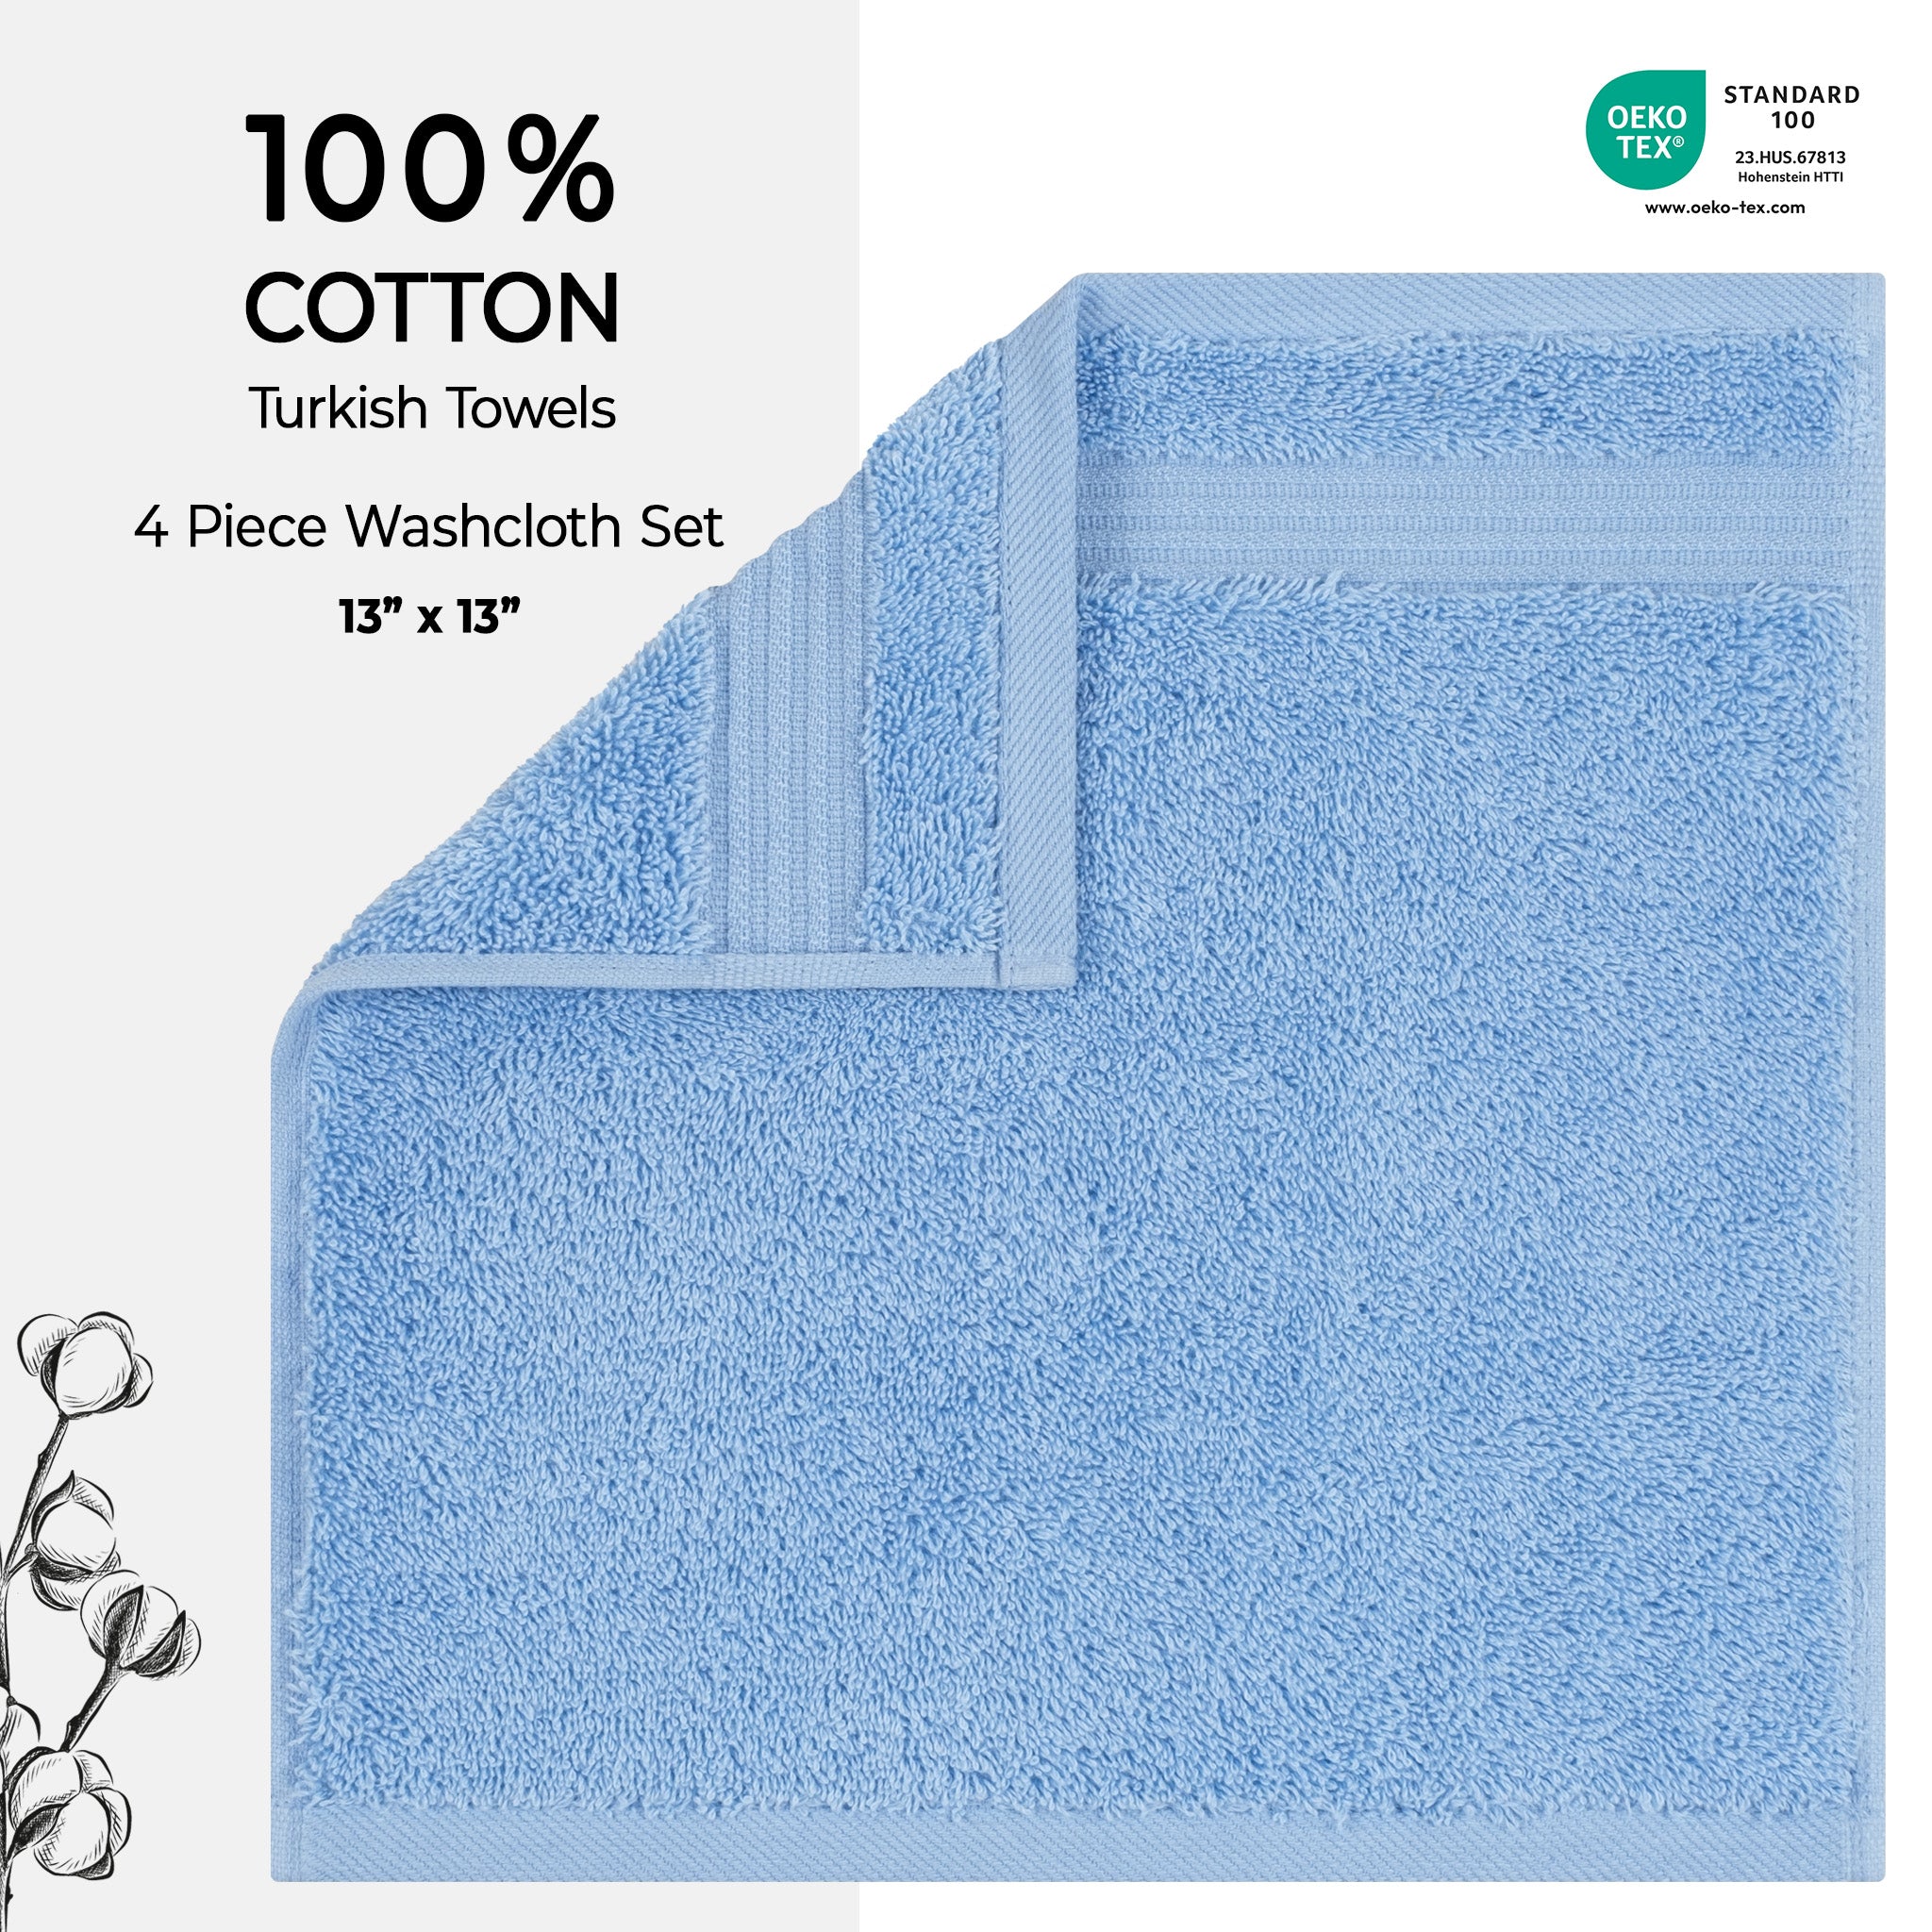 American Soft Linen Bekos 100% Cotton Turkish Towels, 4 Piece Washcloth Towel Set -sky-blue-02